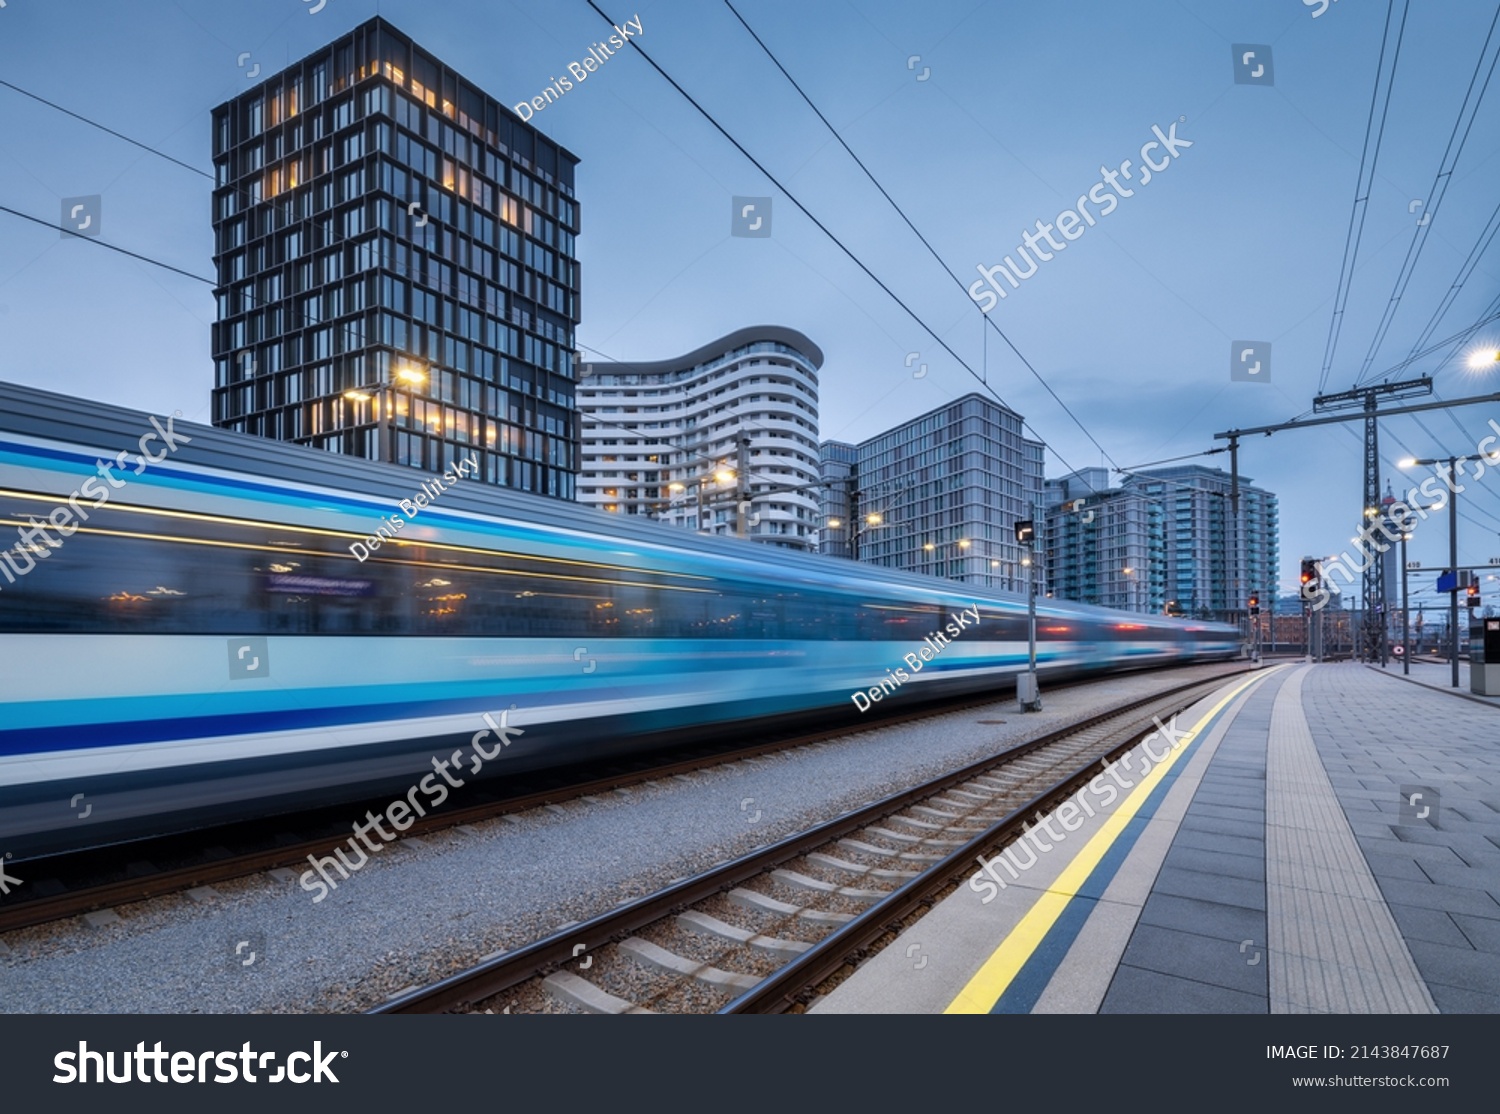 High speed train in motion on the railway station at dusk. Moving blue modern intercity passenger train, railway platform, buildings, city lights. Railroad in Vienna, Austria. Railway transportation #2143847687